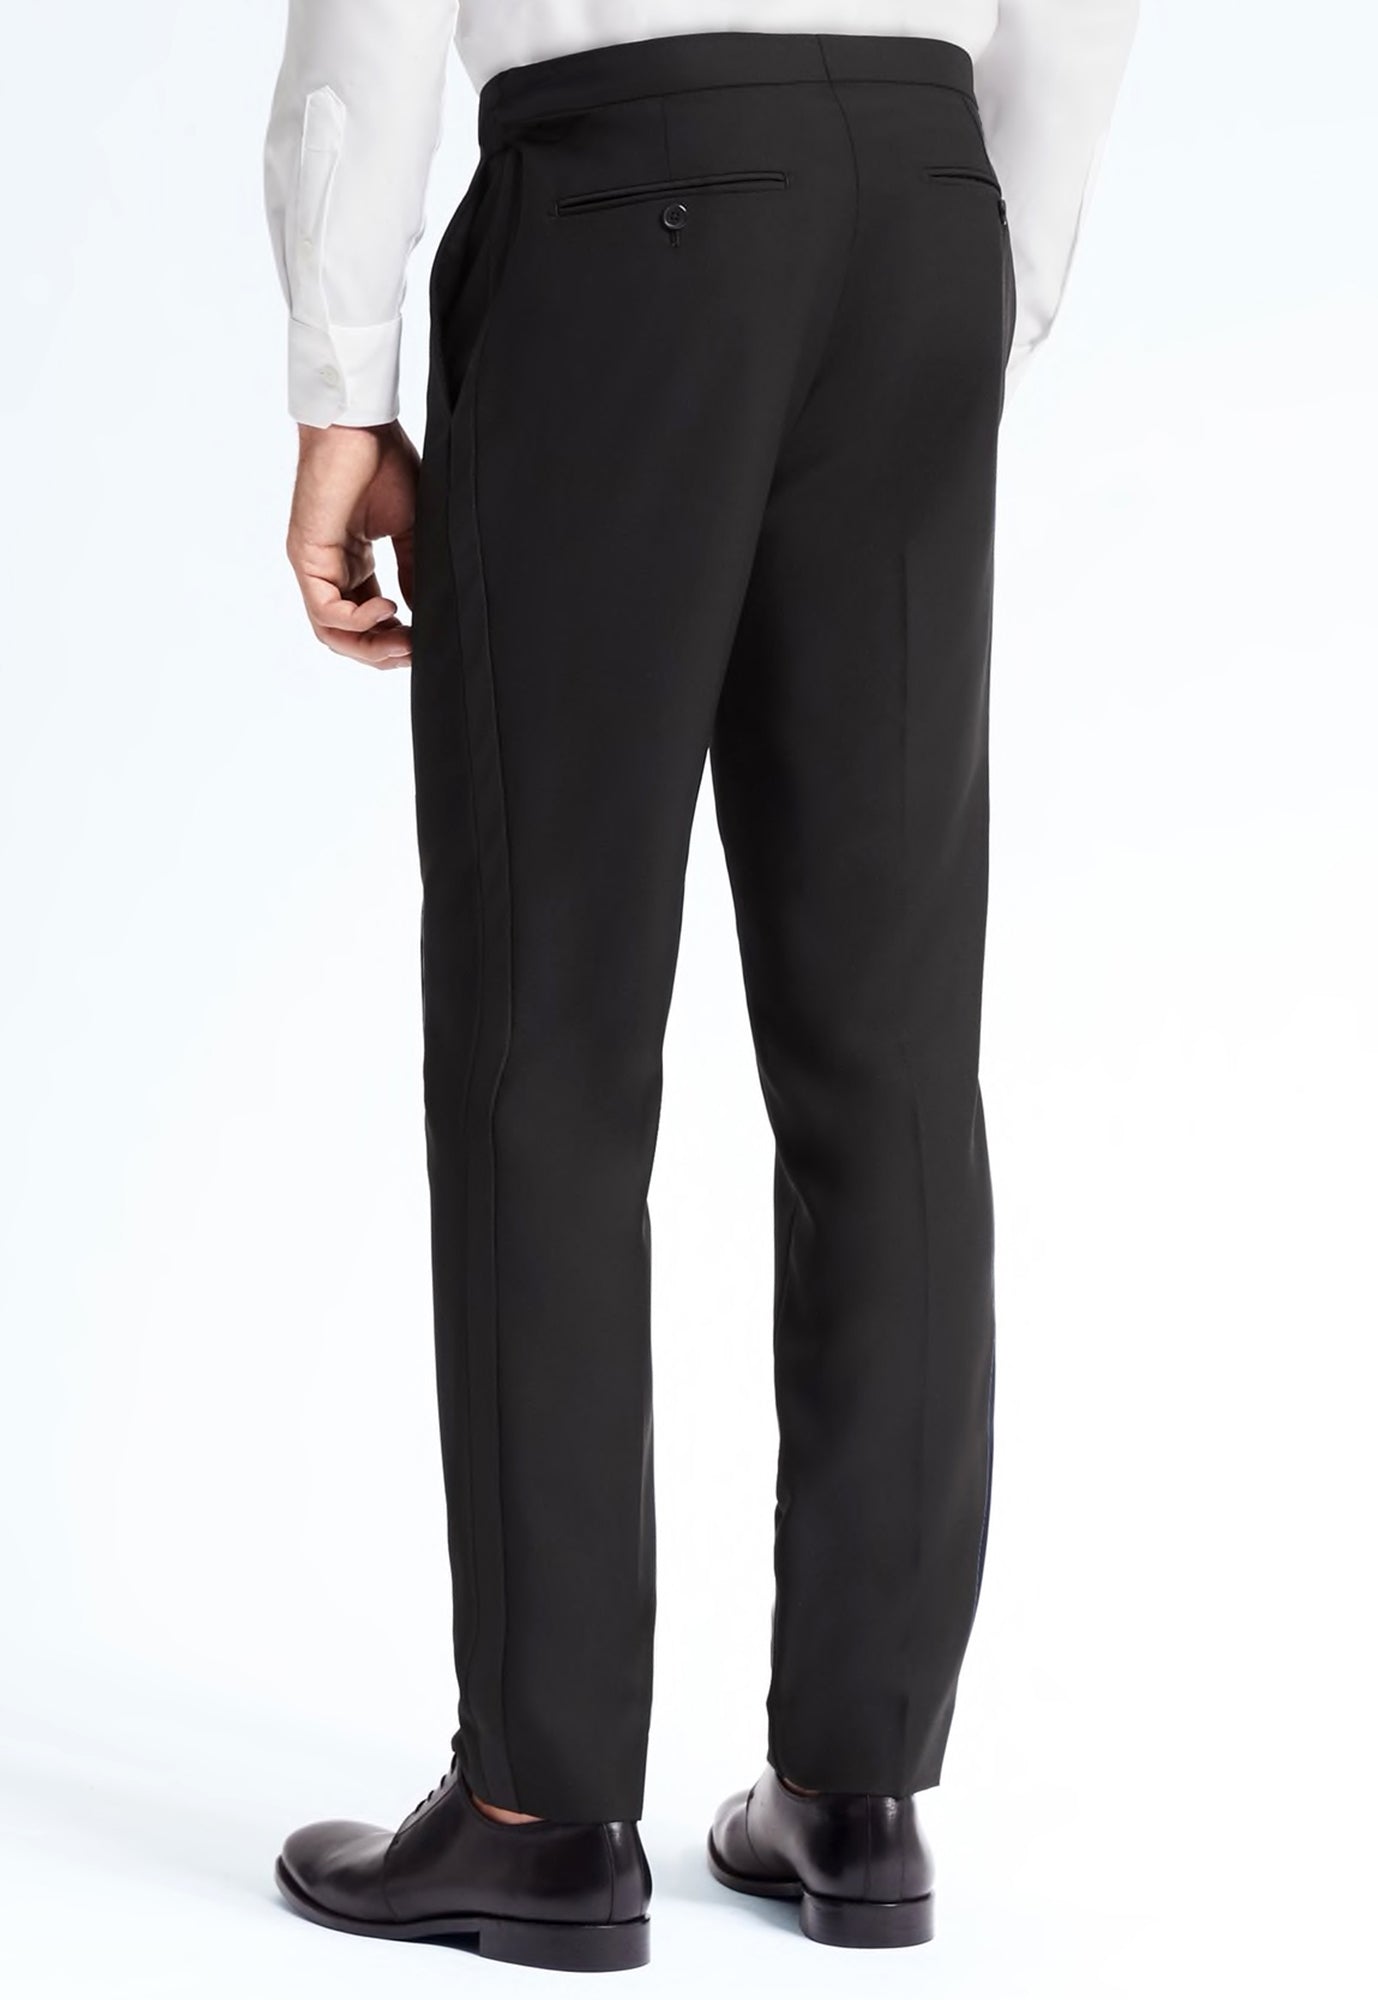 Men's Black, Flat Front, Comfort-Waist Tuxedo Pants with Satin Stripe -  99tux